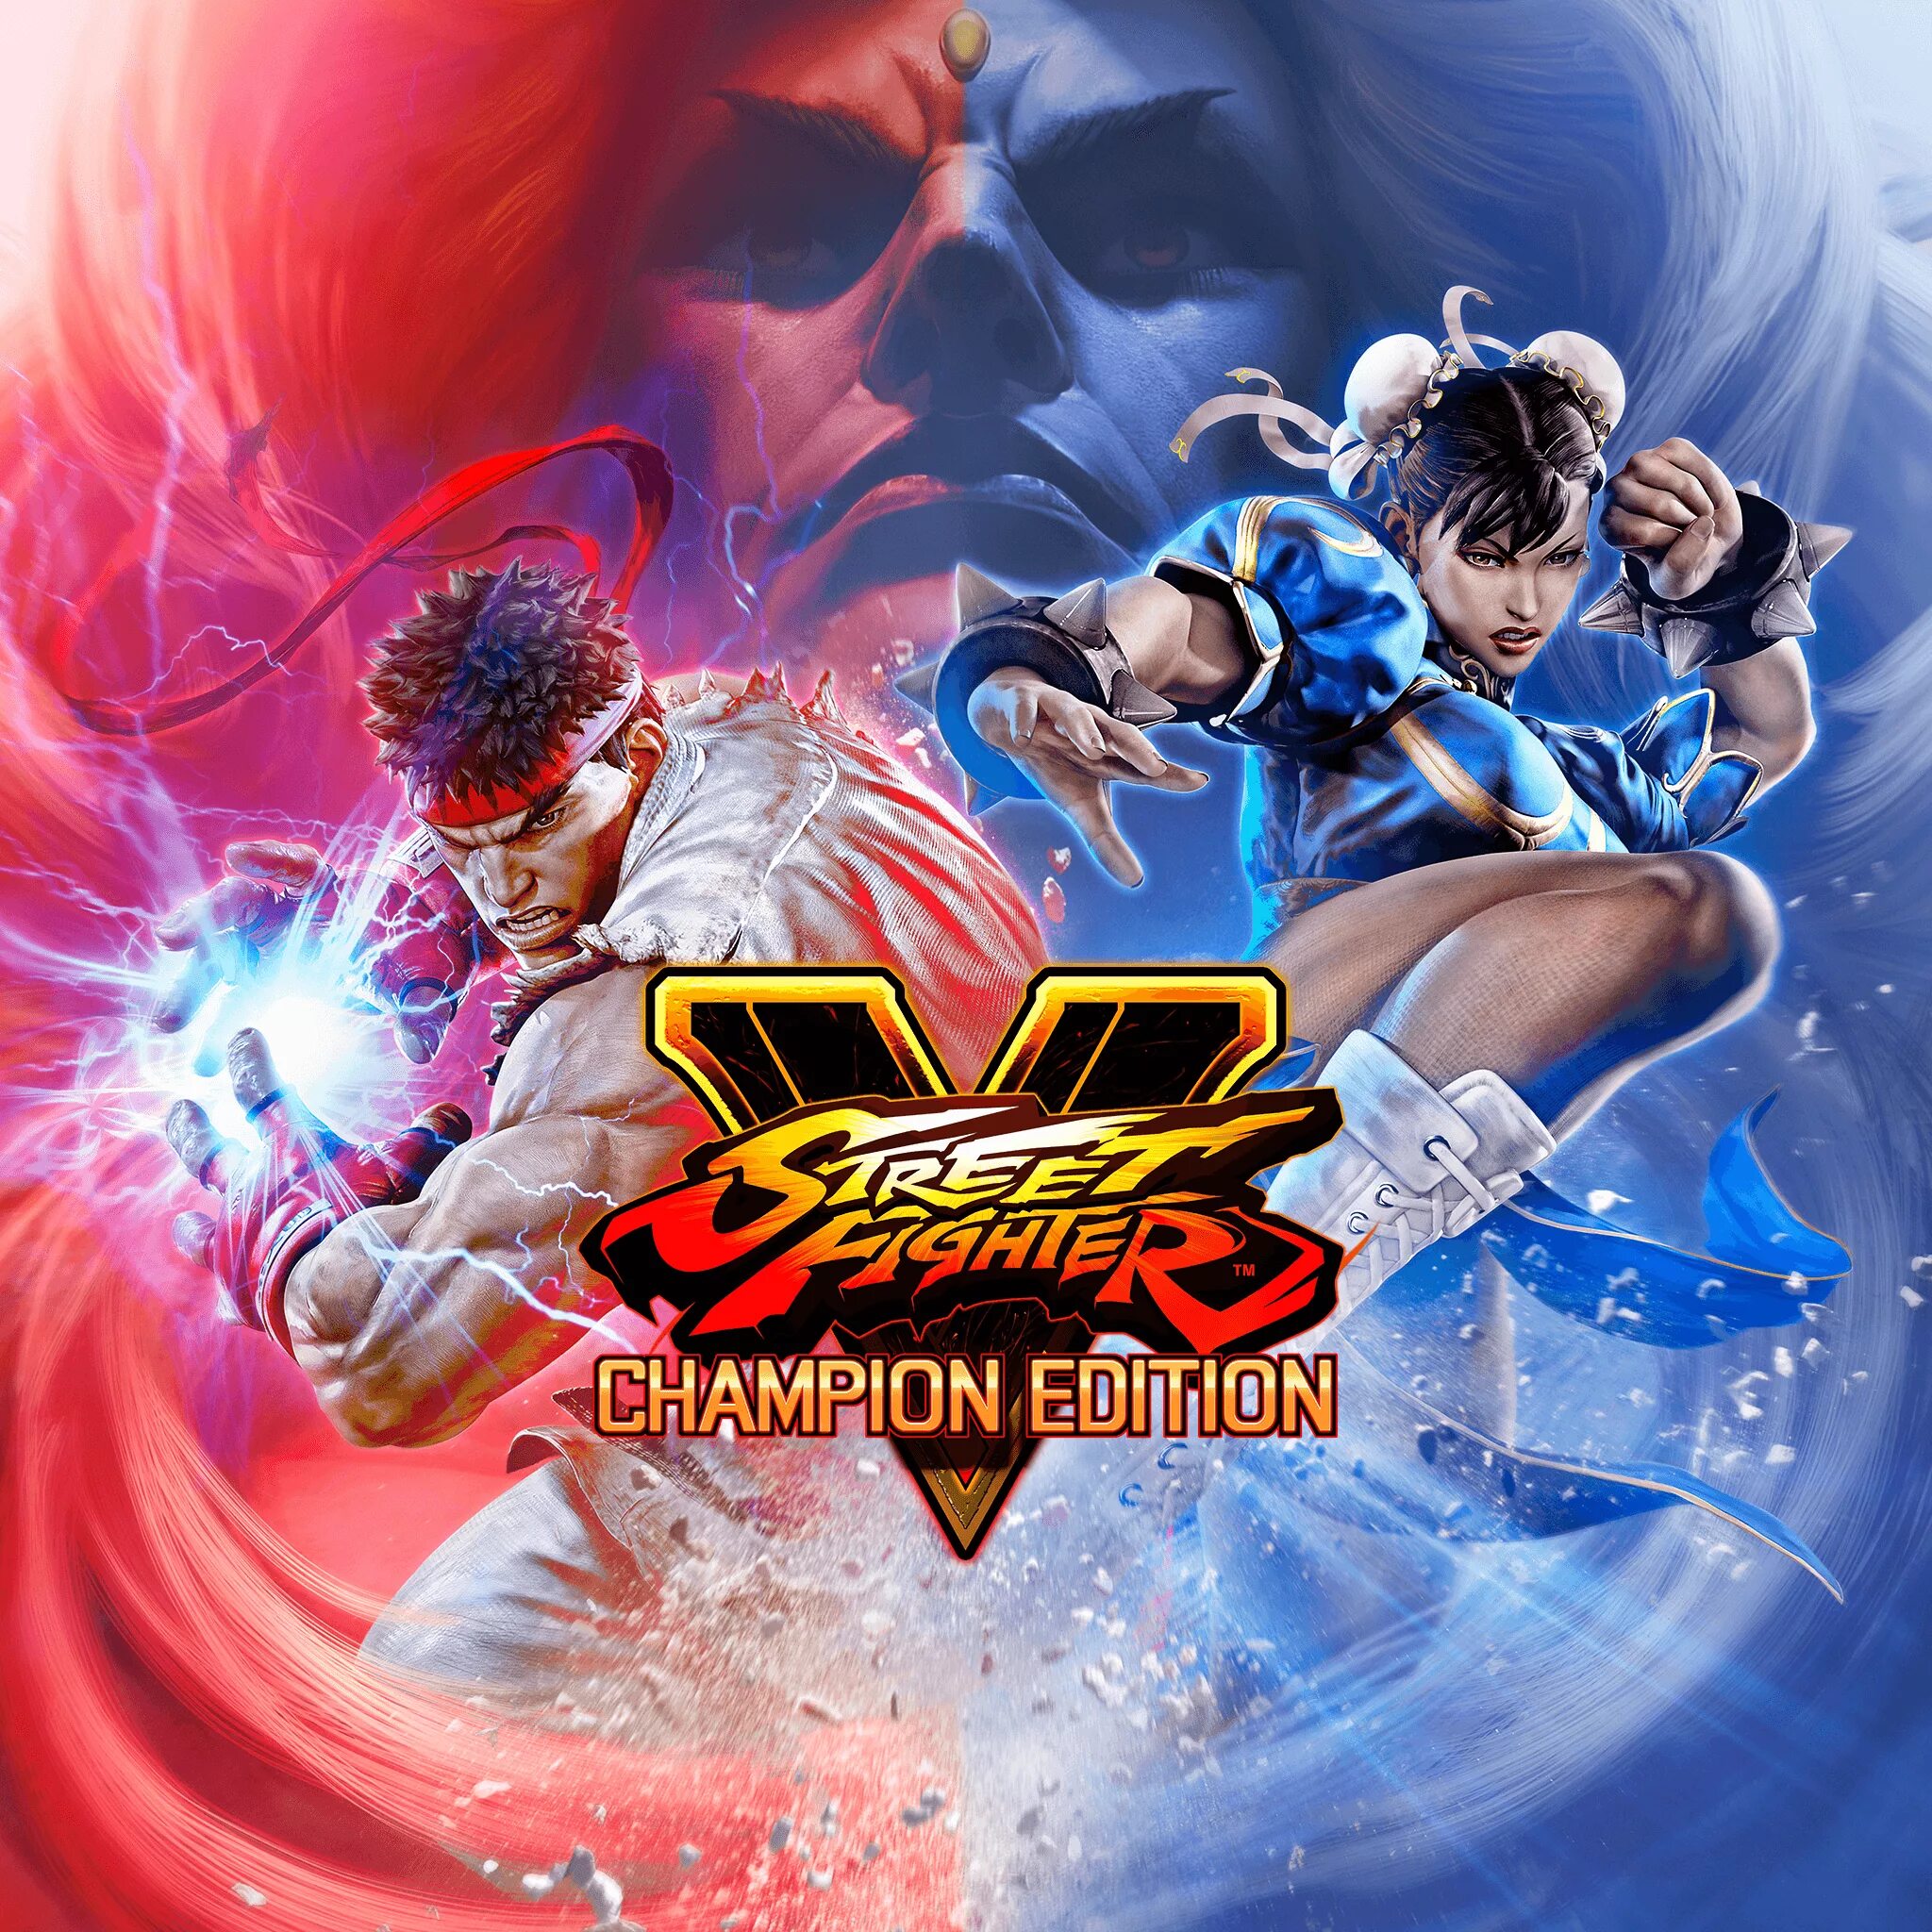 Street Fighter v: Champion Edition ps4. Street Fighter 5 Champion Edition. Street Fighter ps5. Street Fighter 4 Champion Edition.